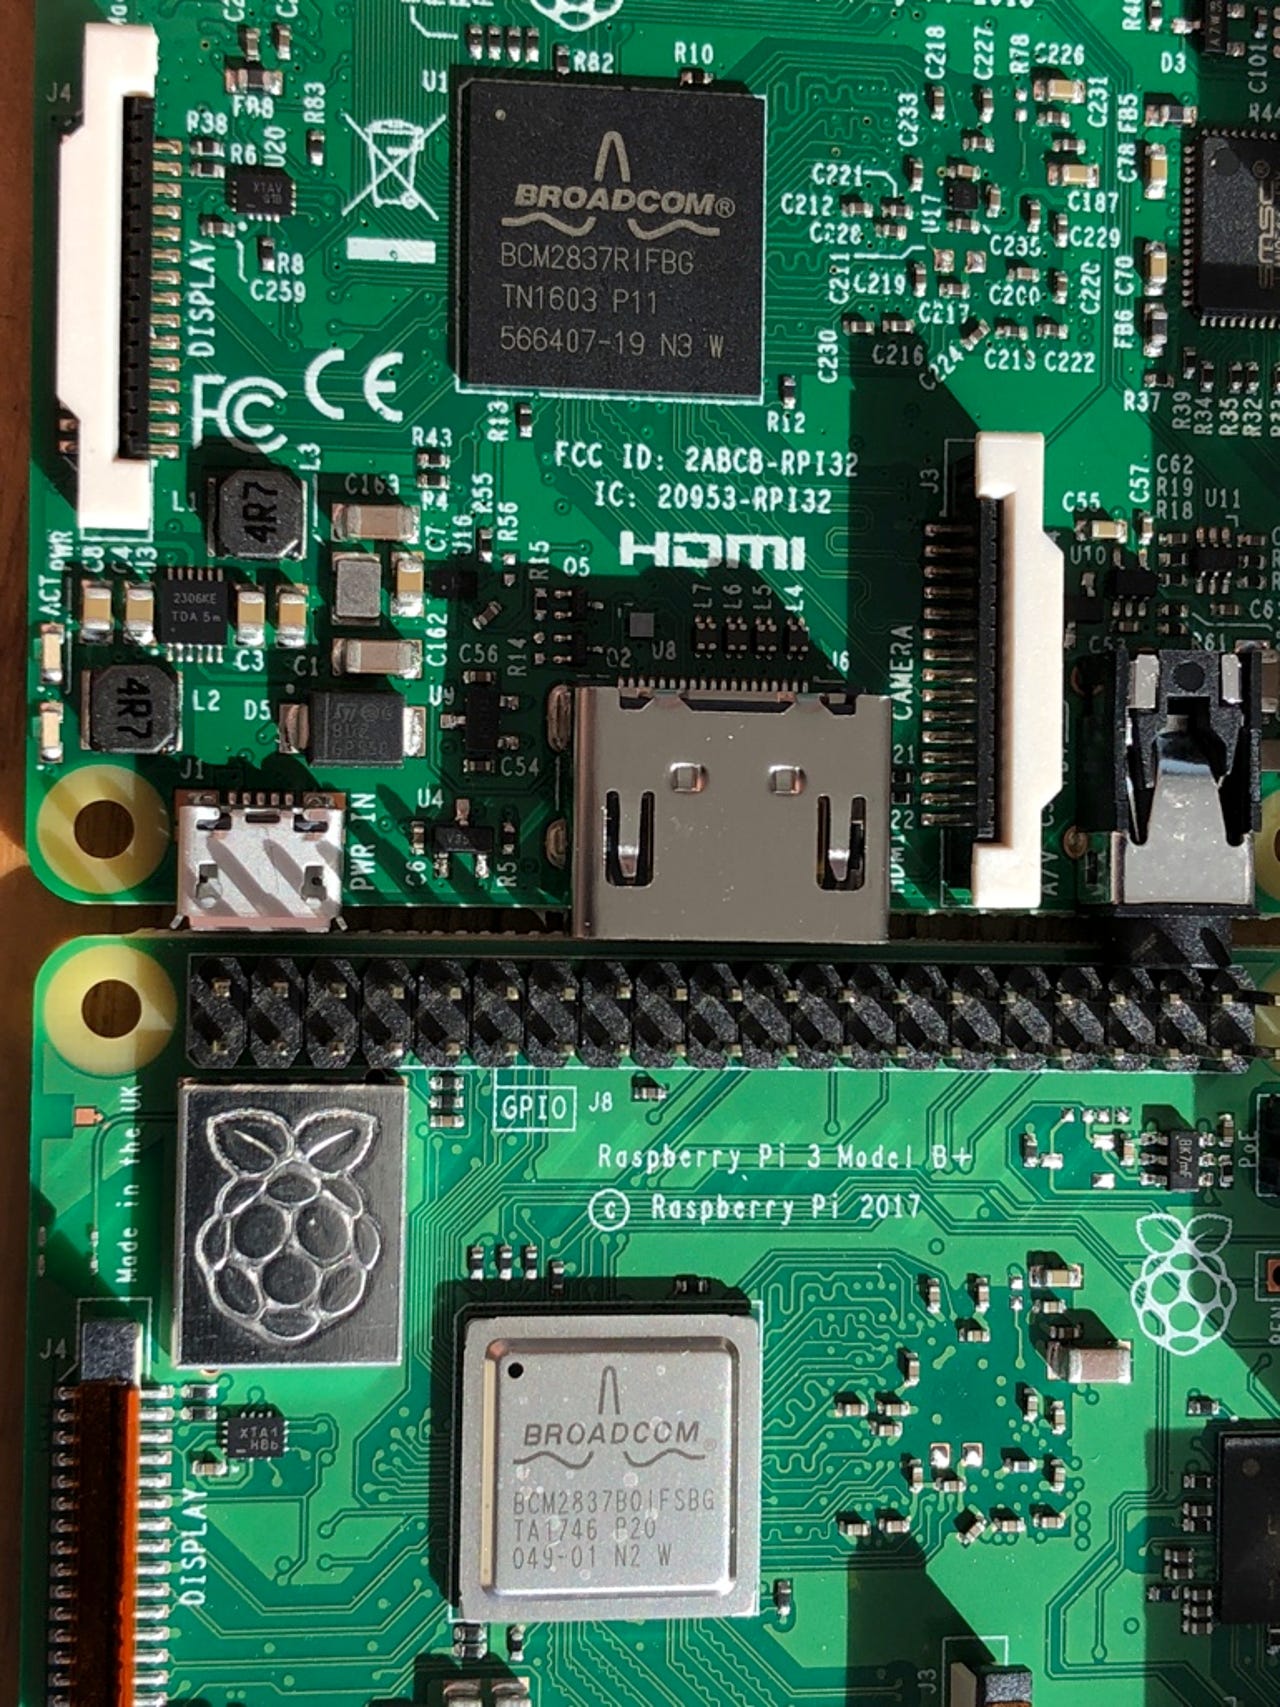 Closeup of the processors